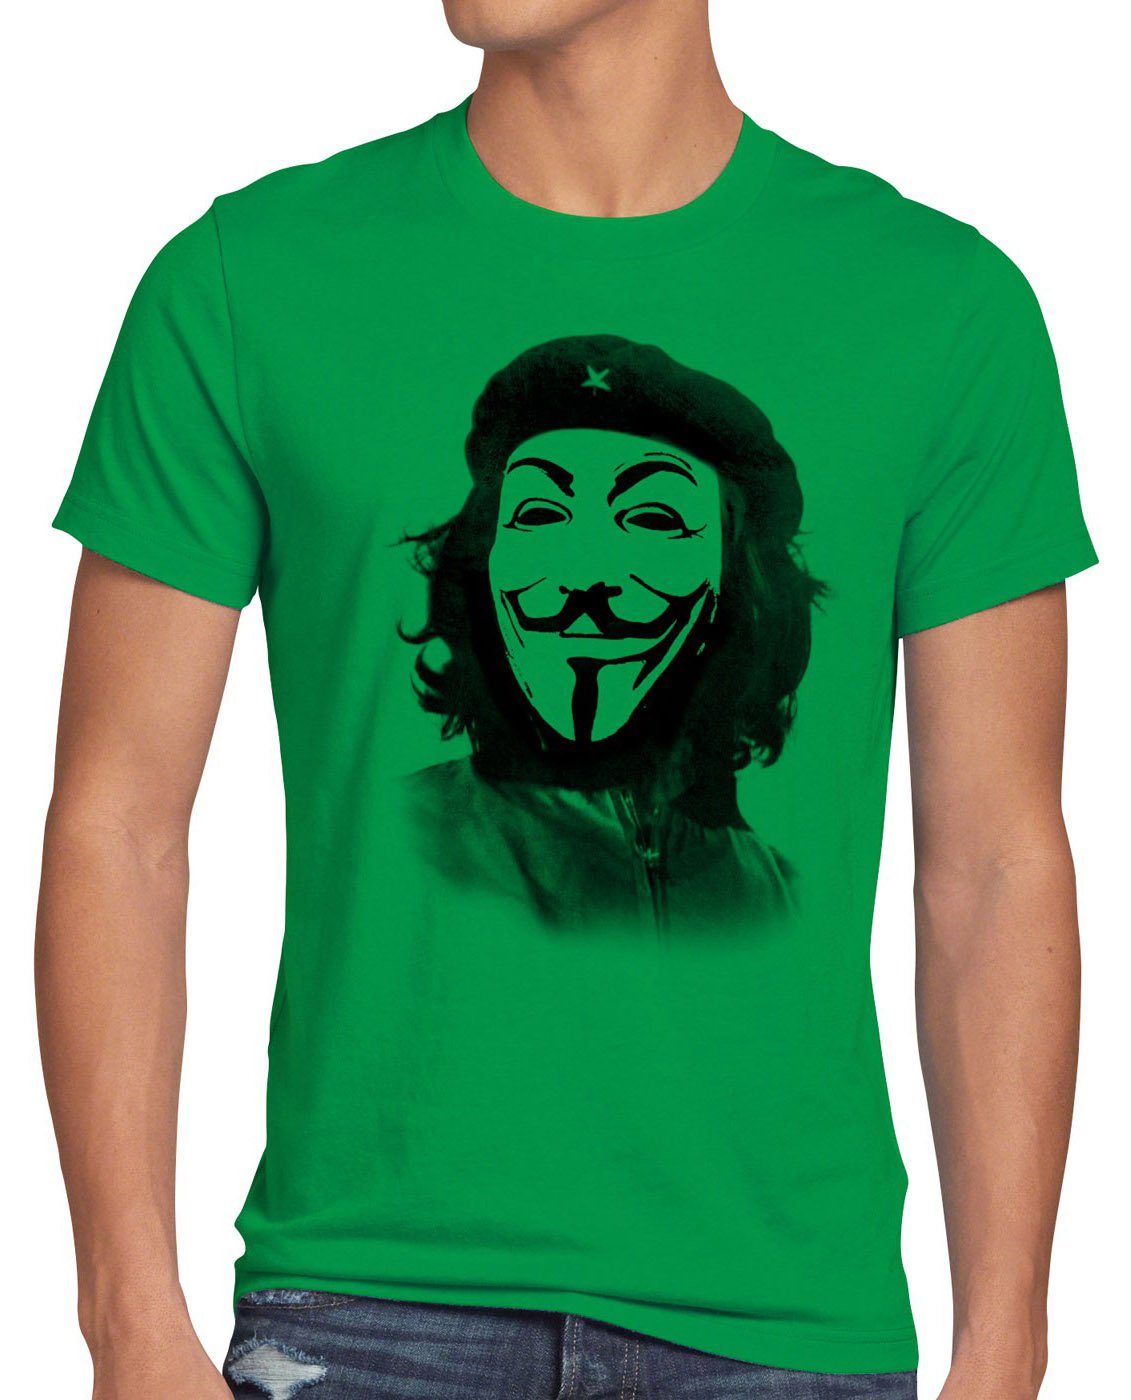 style3 Print-Shirt guy kuba g8 occupy Anonymous T-Shirt grün Herren Che hacker guy Guevara maske fawkes fawkes